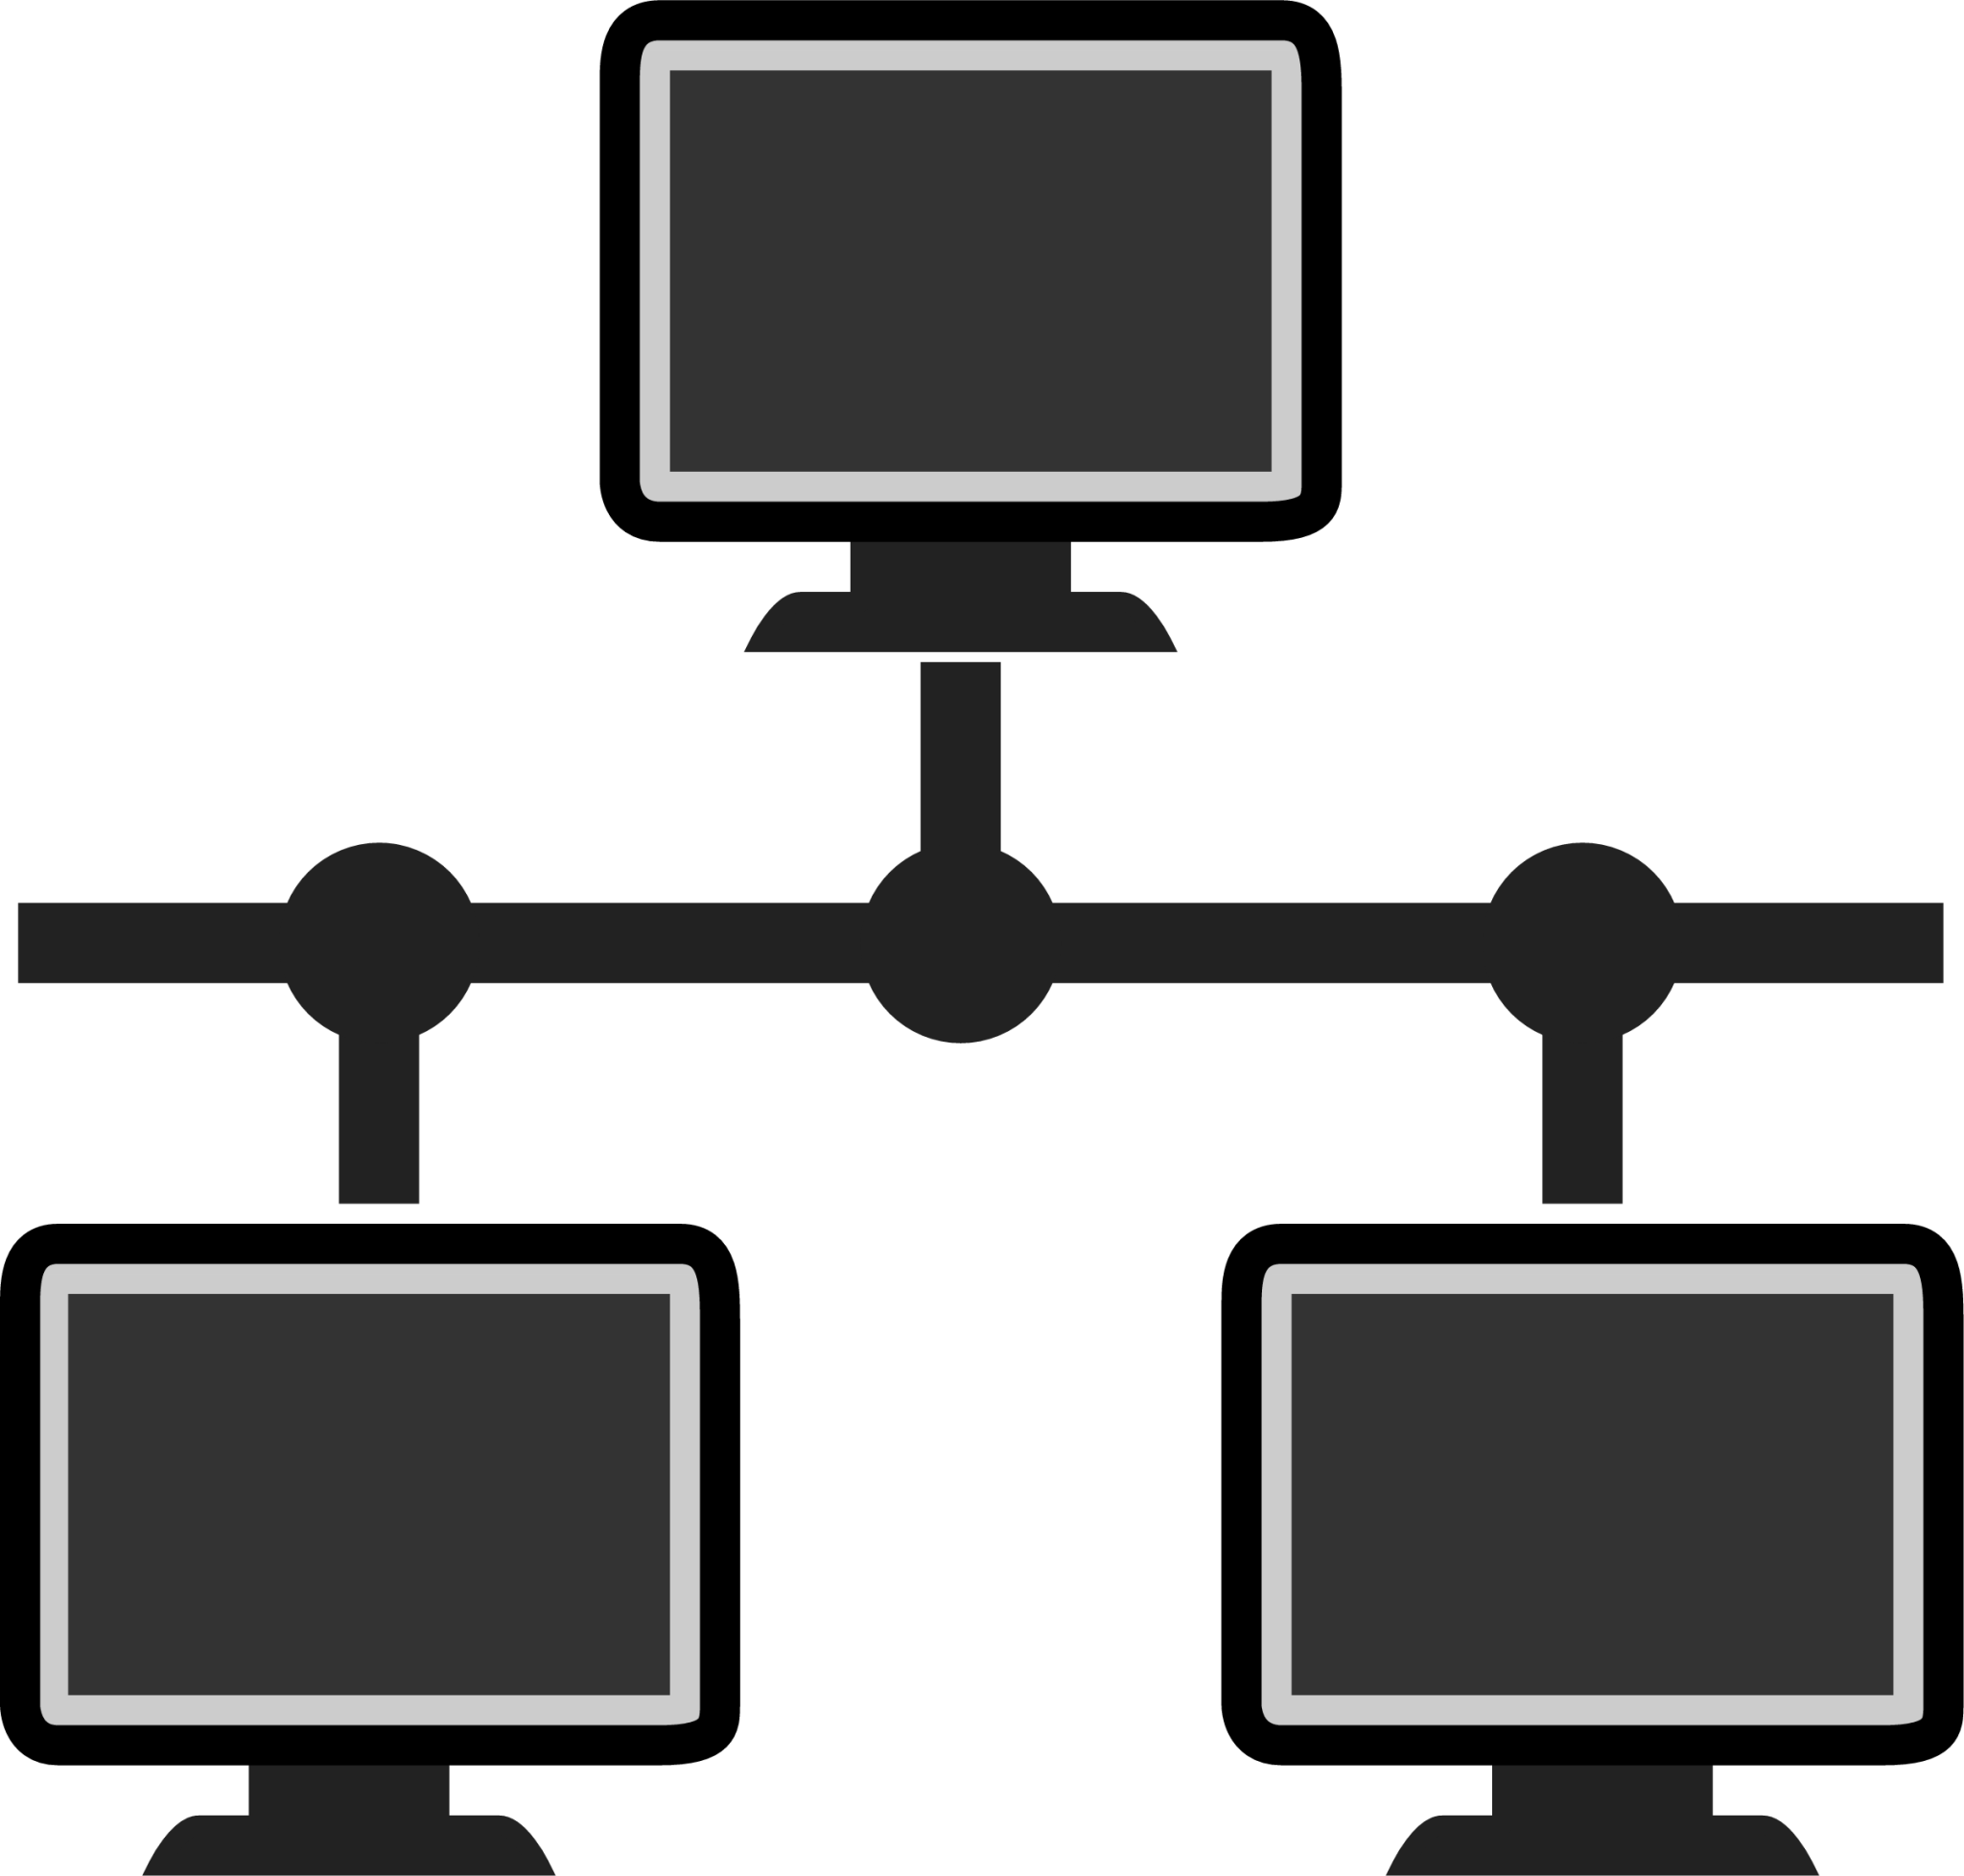 network2 icon